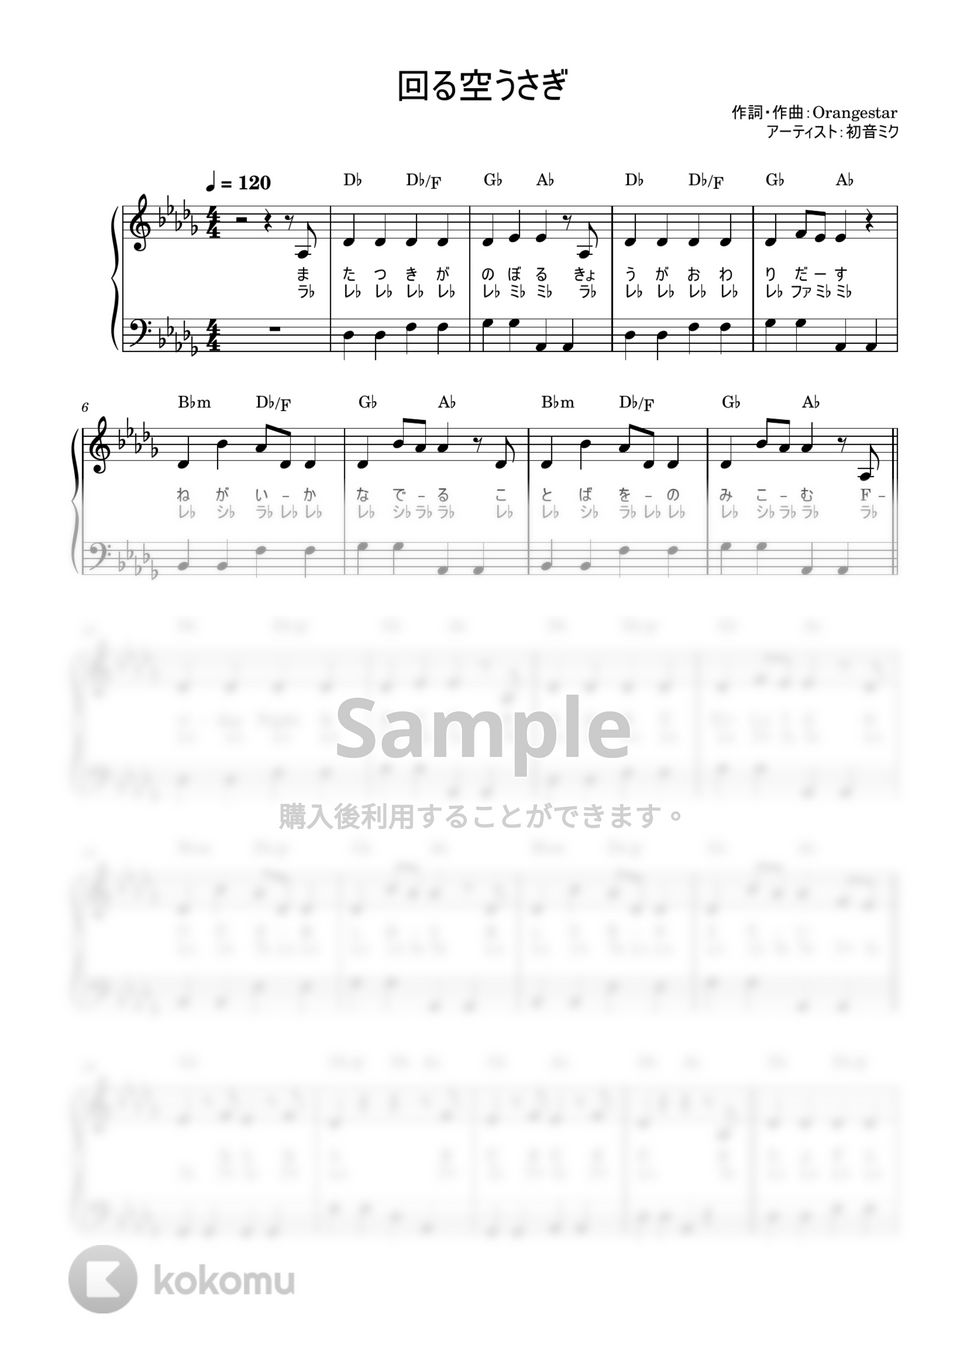 Orangestar feat.初音ミク - 回る空うさぎ (かんたん / 歌詞付き / ドレミ付き / 初心者) by piano.tokyo